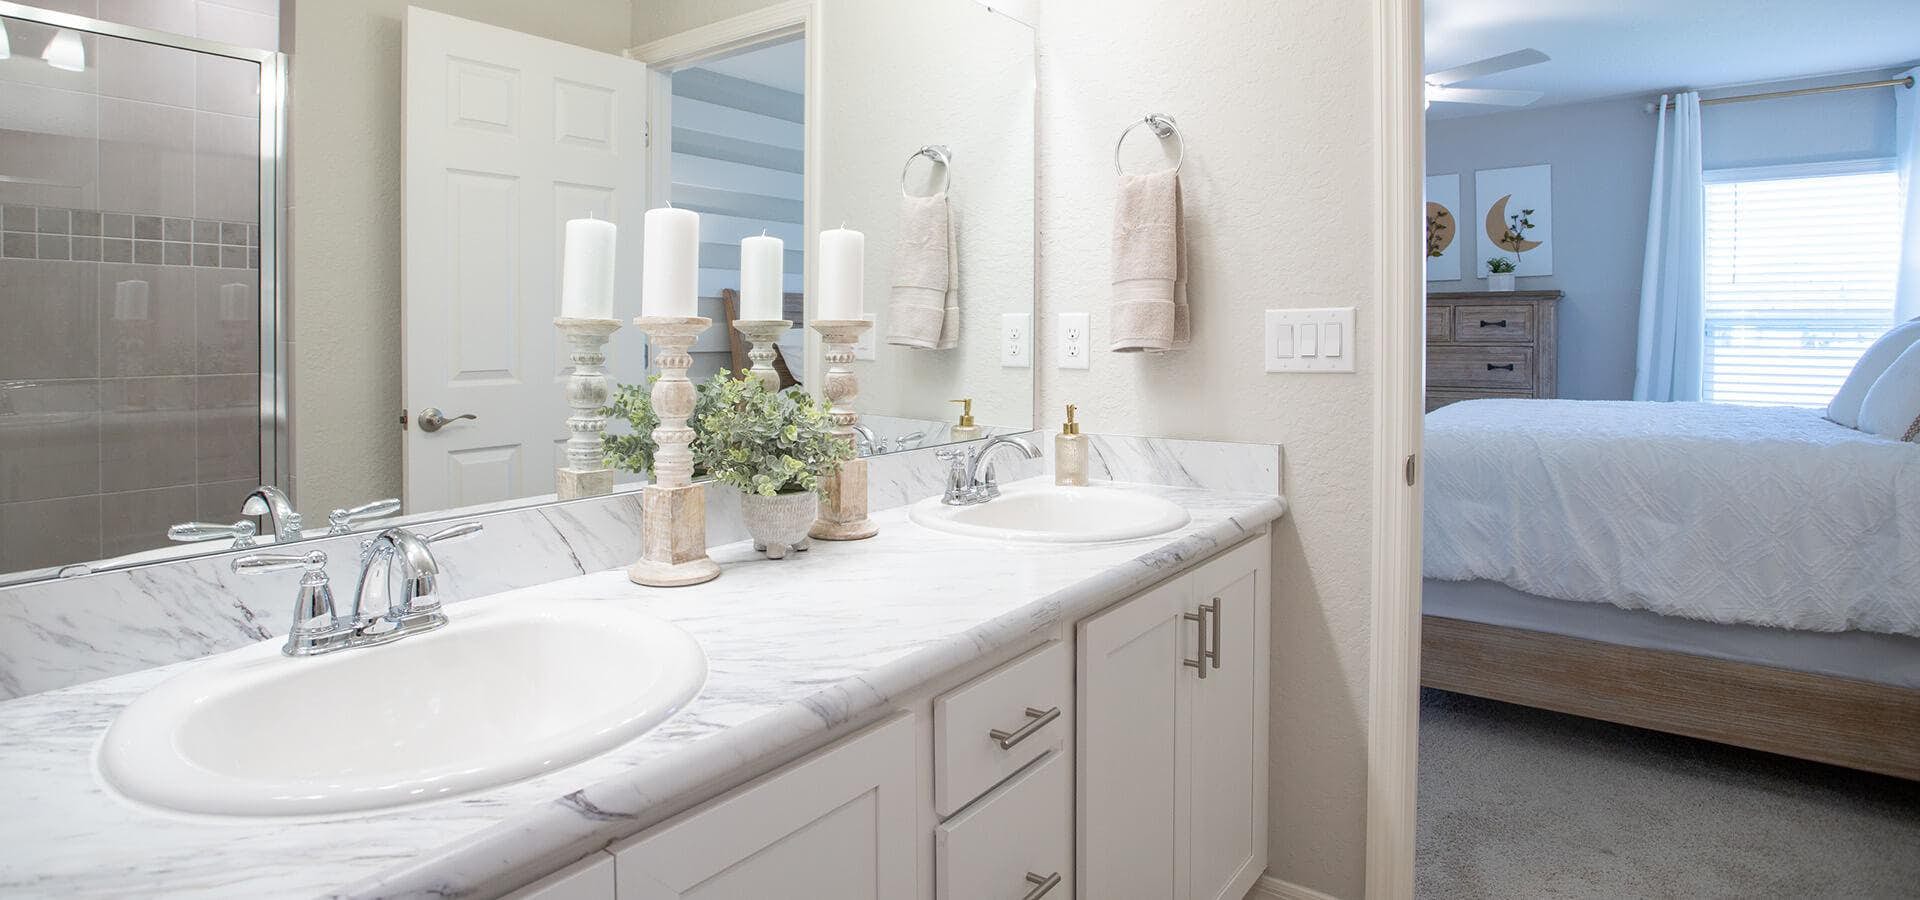 White bathroom decor in a Florida new home